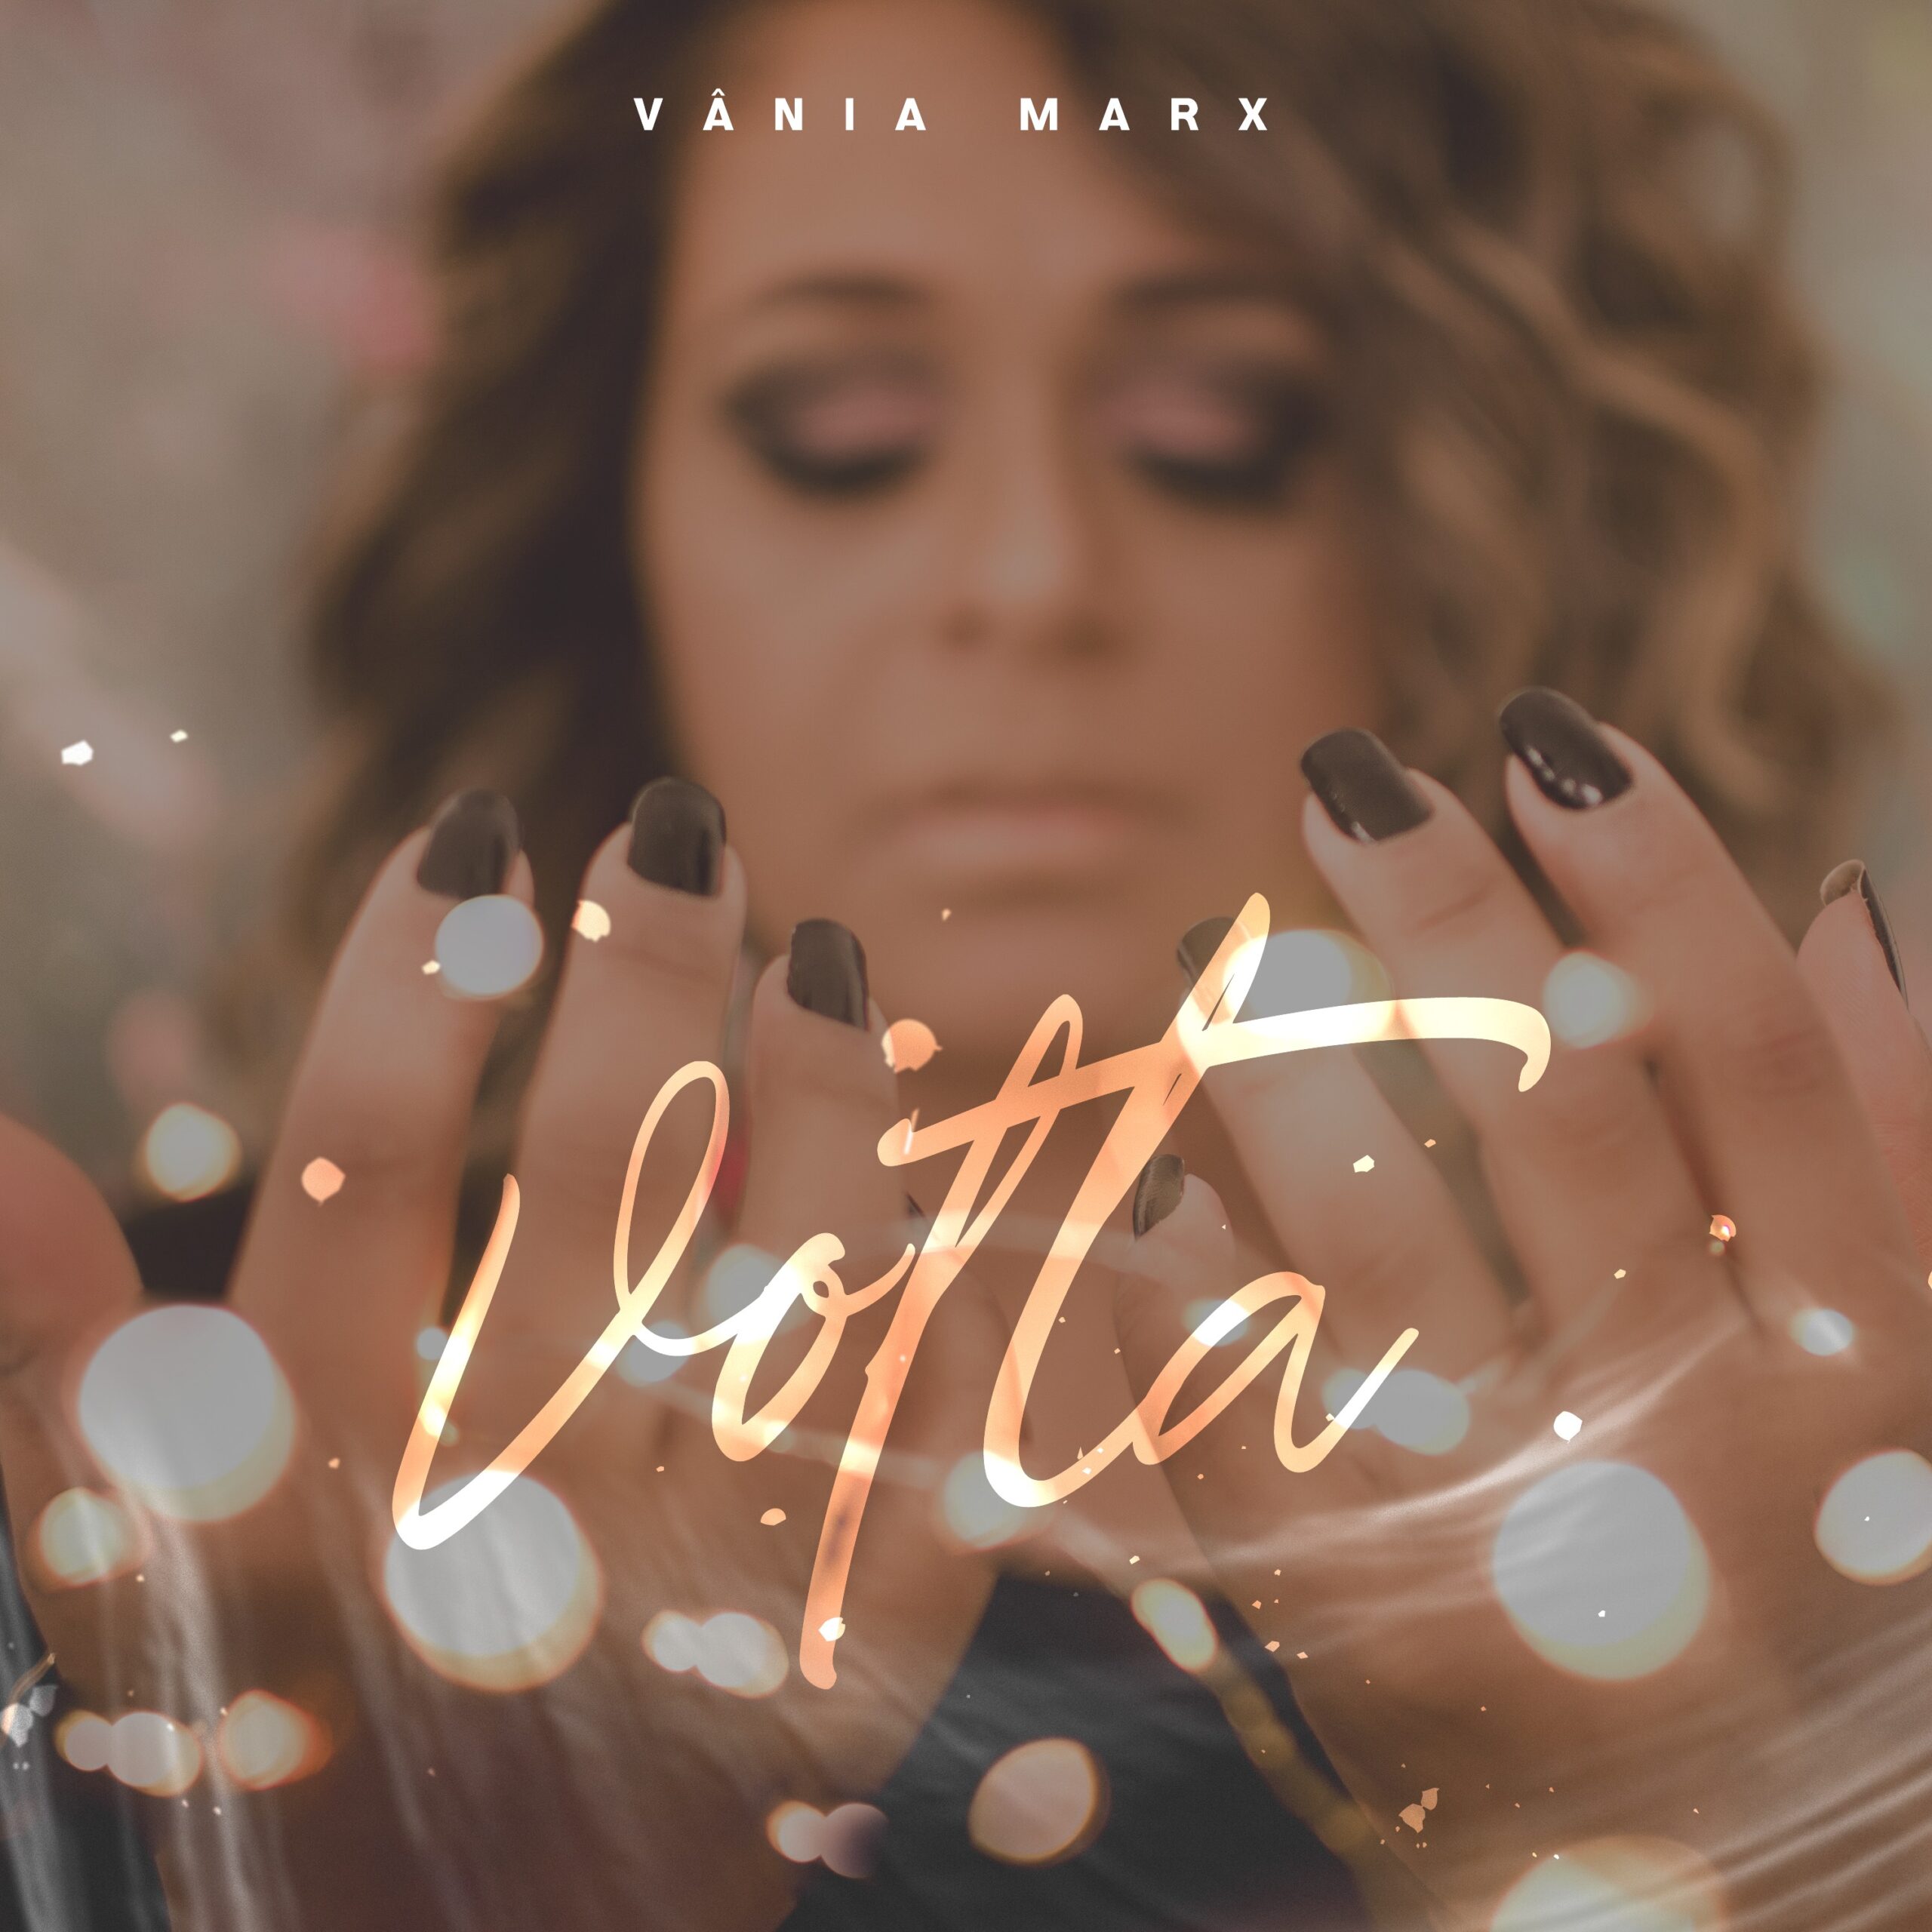 Vânia Marx lança novo single “Volta”, ouça.